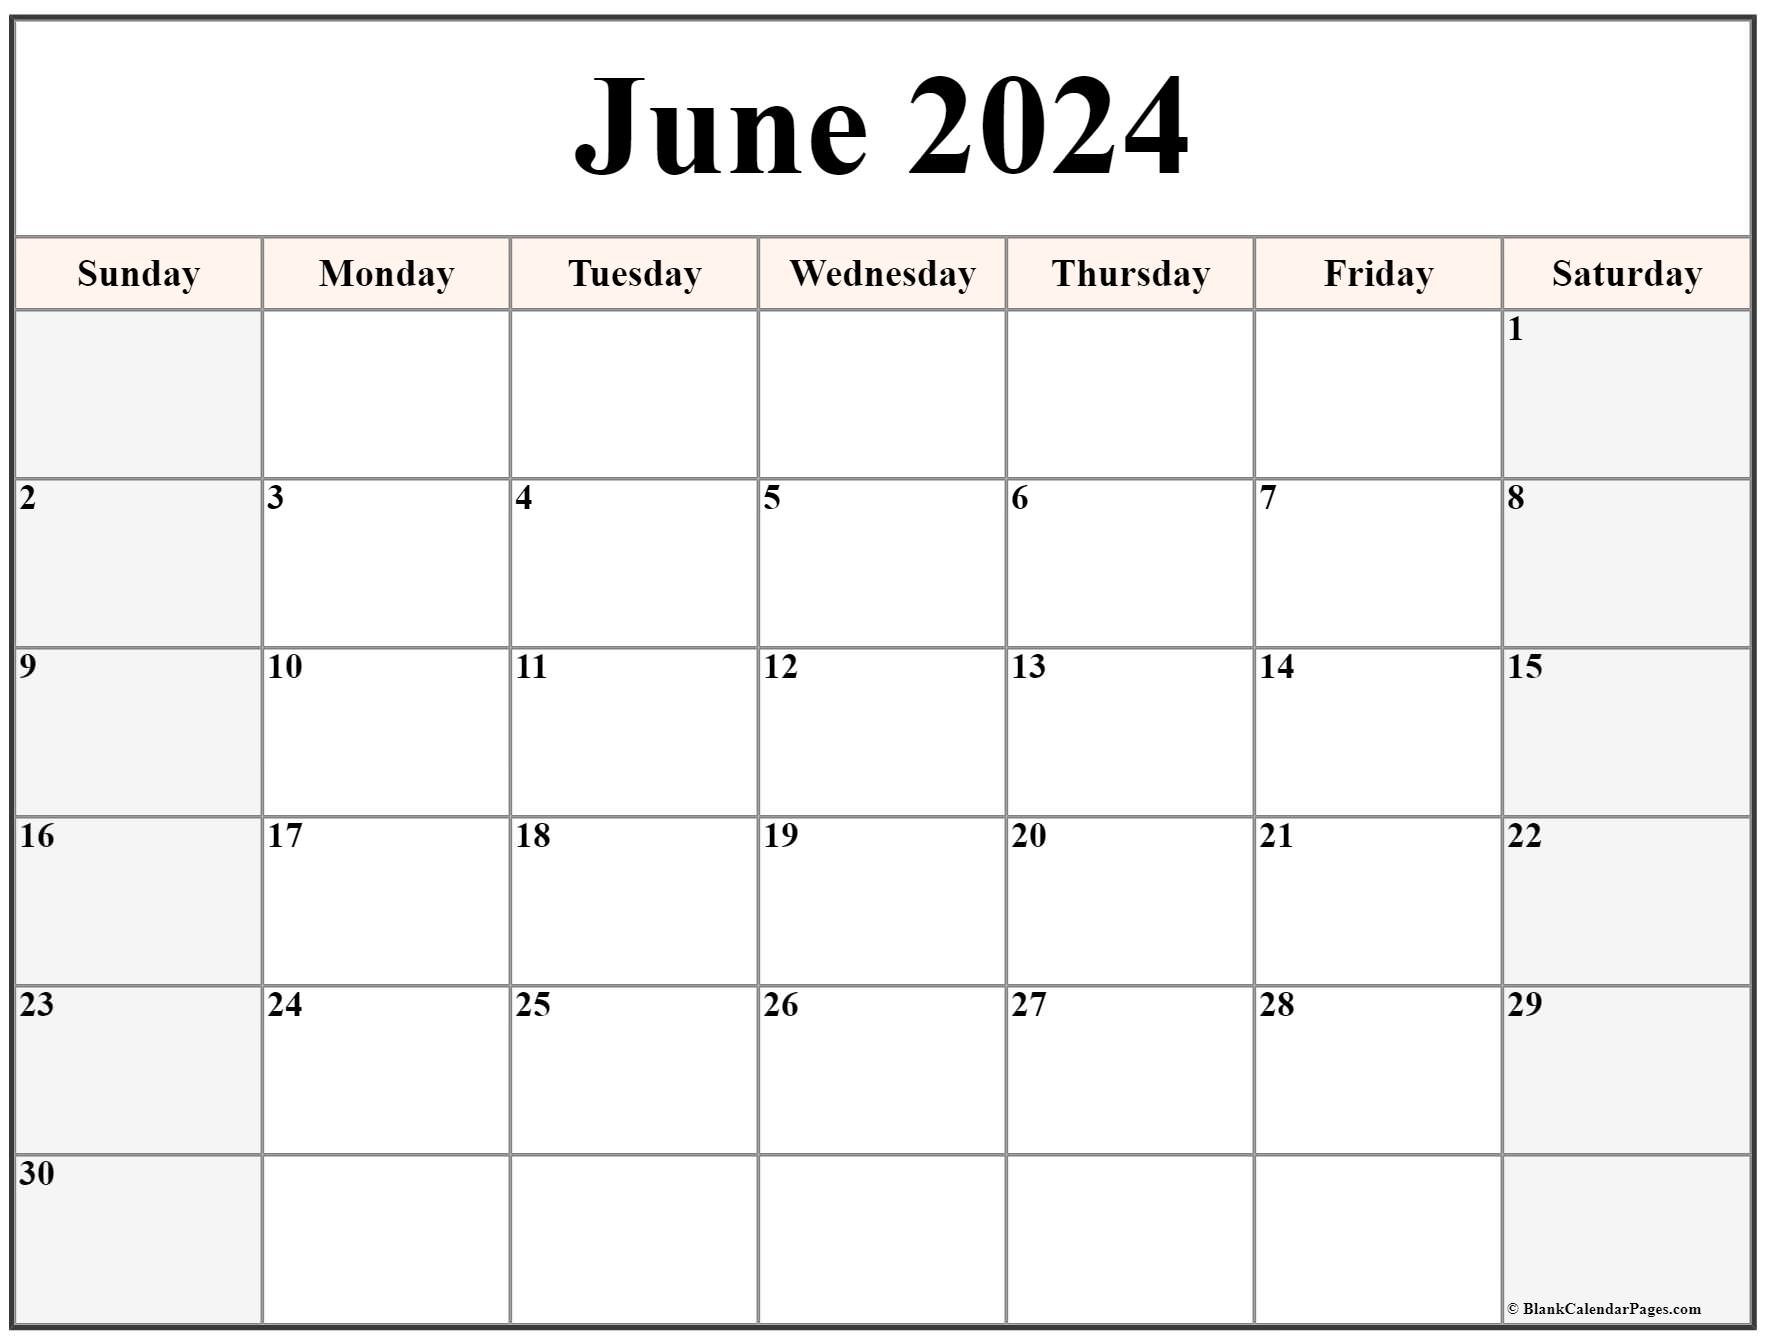 june-2023-calendar-june-2023-vrat-tyohar-hindu-festival-2023-2023-cekicrot21-gambaran